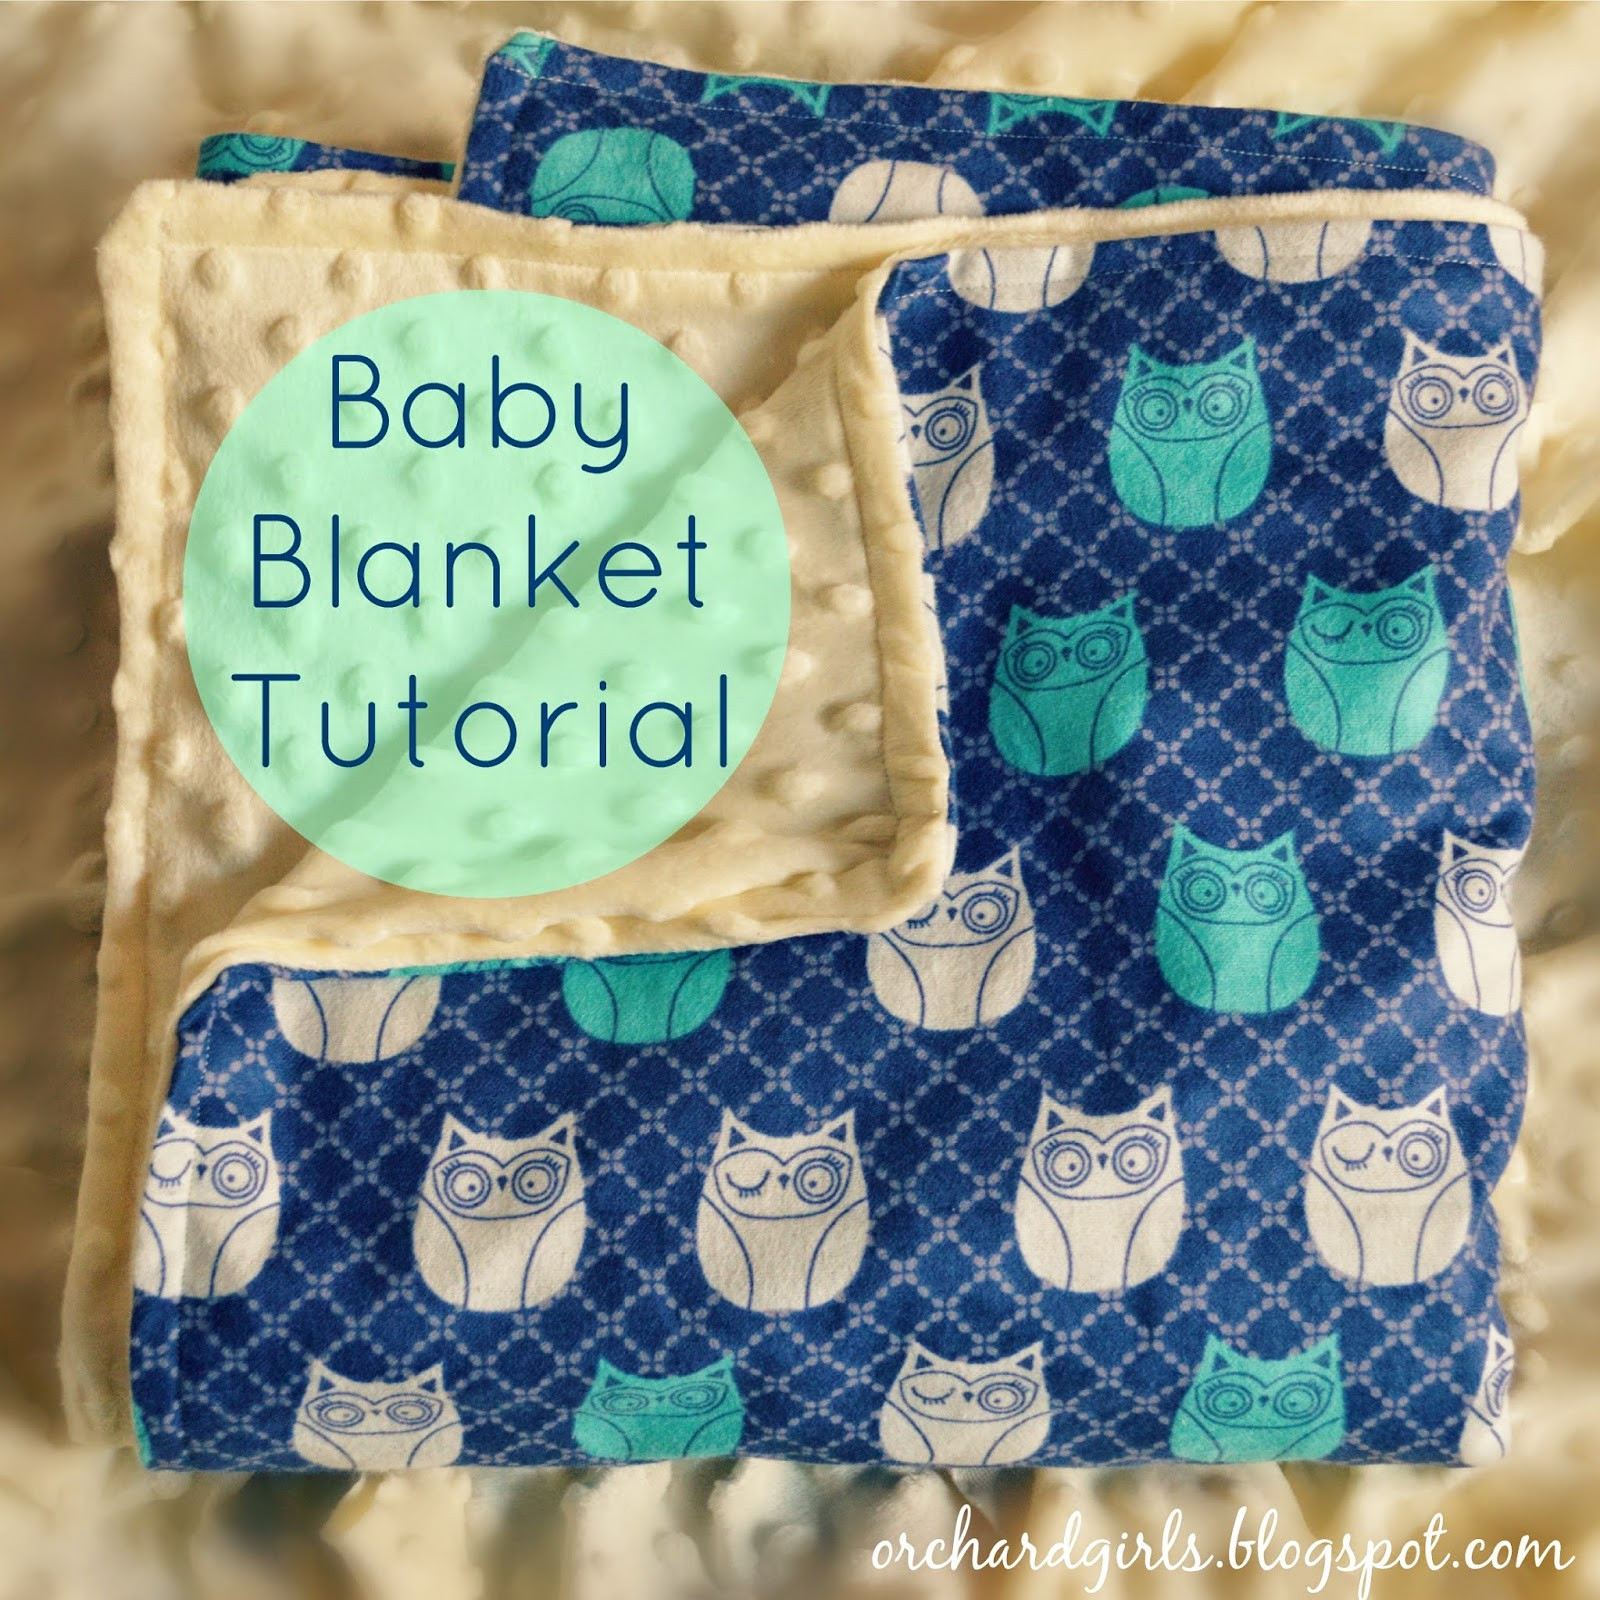 Minky Baby Blanket DIY
 Orchard Girls Super easy DIY Baby Blanket Tutorial with